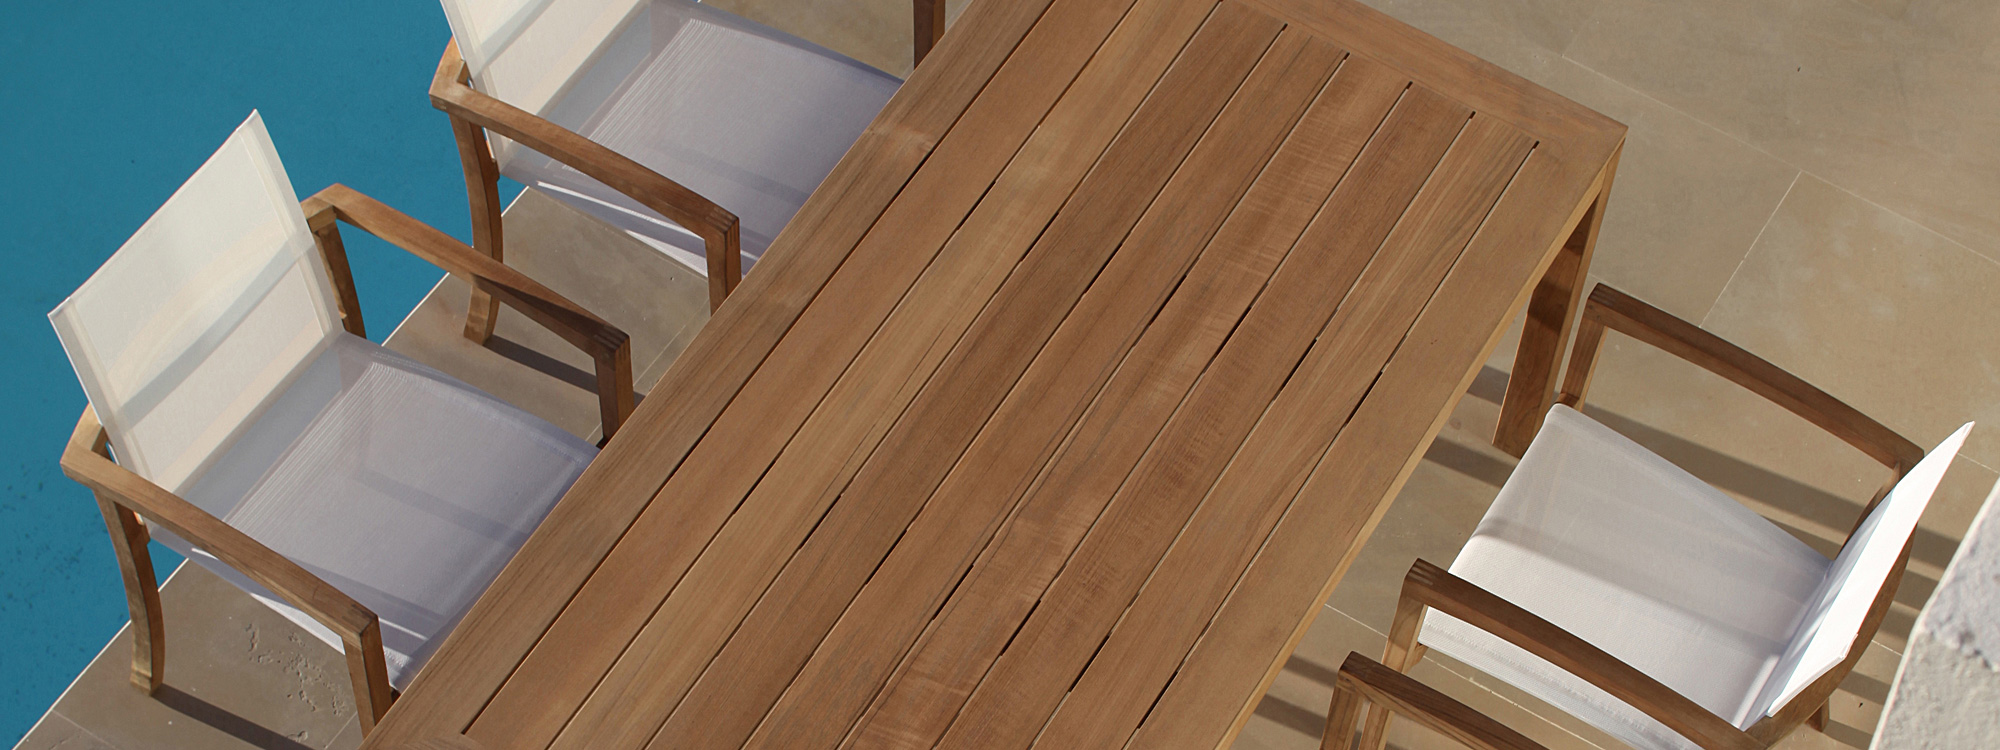 Birdseye view of XQI 55 carver chair & teak planks for XQI dining table by Royal Botania